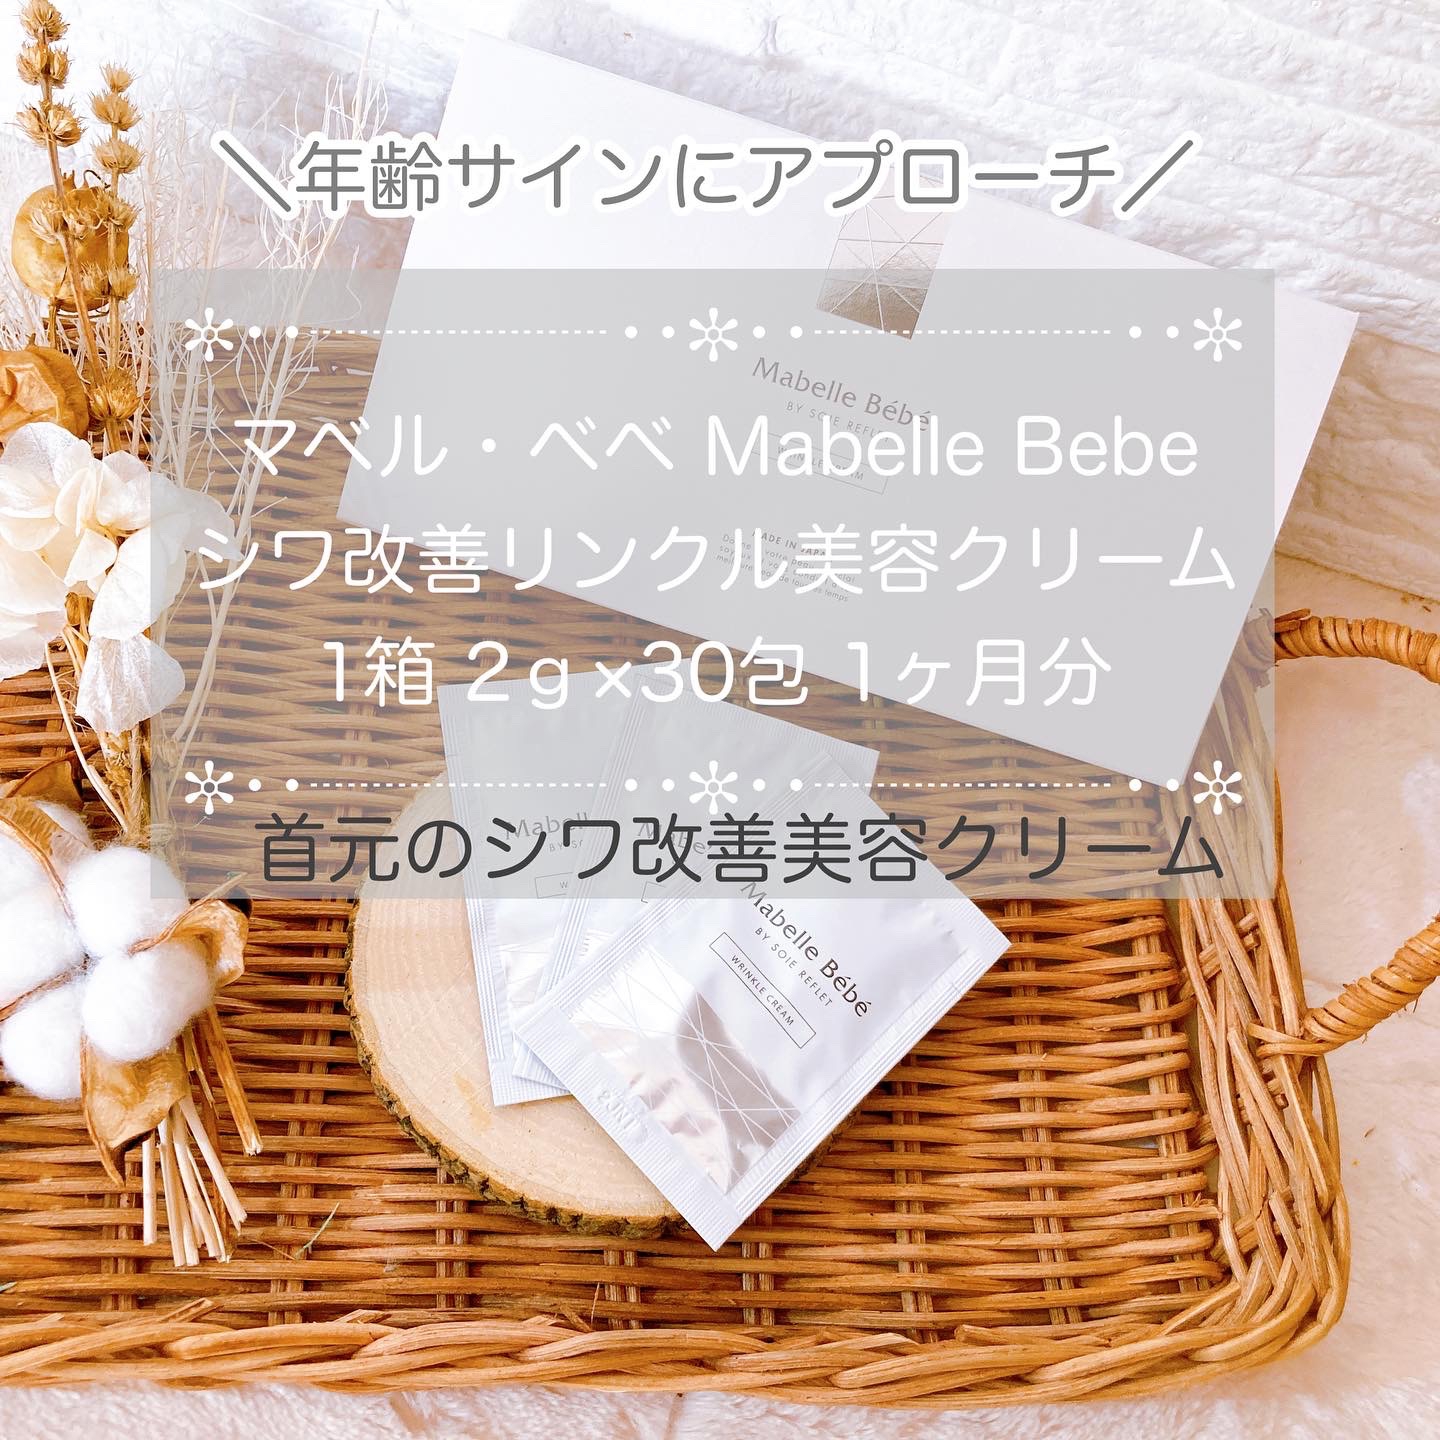 Mabelle Bébé(マベル・ベベ)シワ改善リンクル美容クリームを使ったメグさんのクチコミ画像1